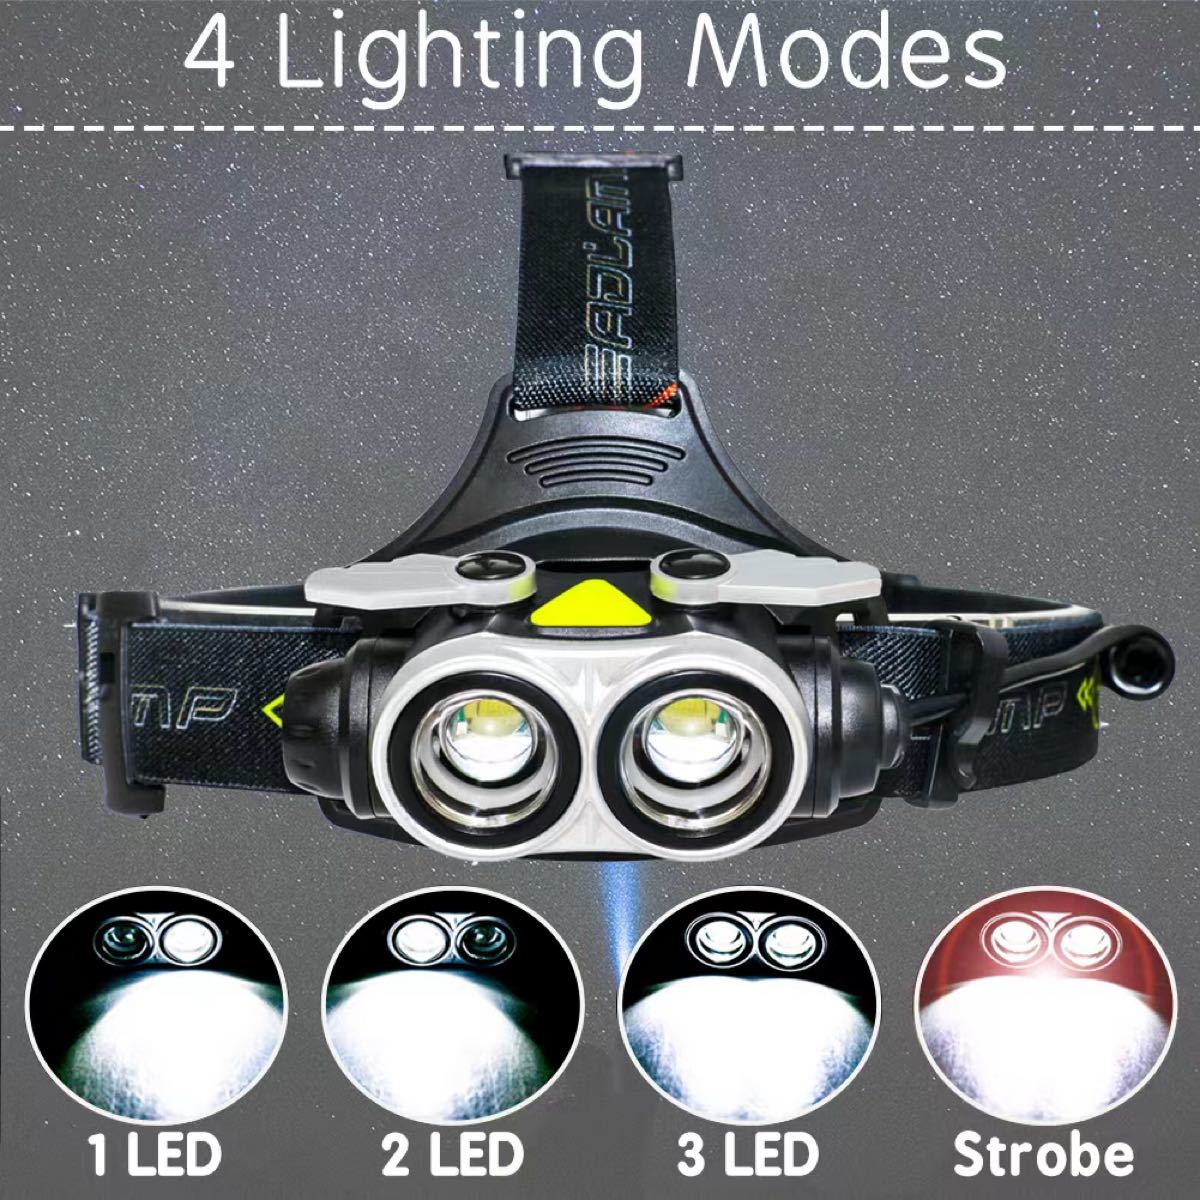 LED ヘッドライト 超軽量 小型 四つ点灯モード 防水 ズーム機能 角度調整 800ルーメン 最大距離200m 夜釣り 